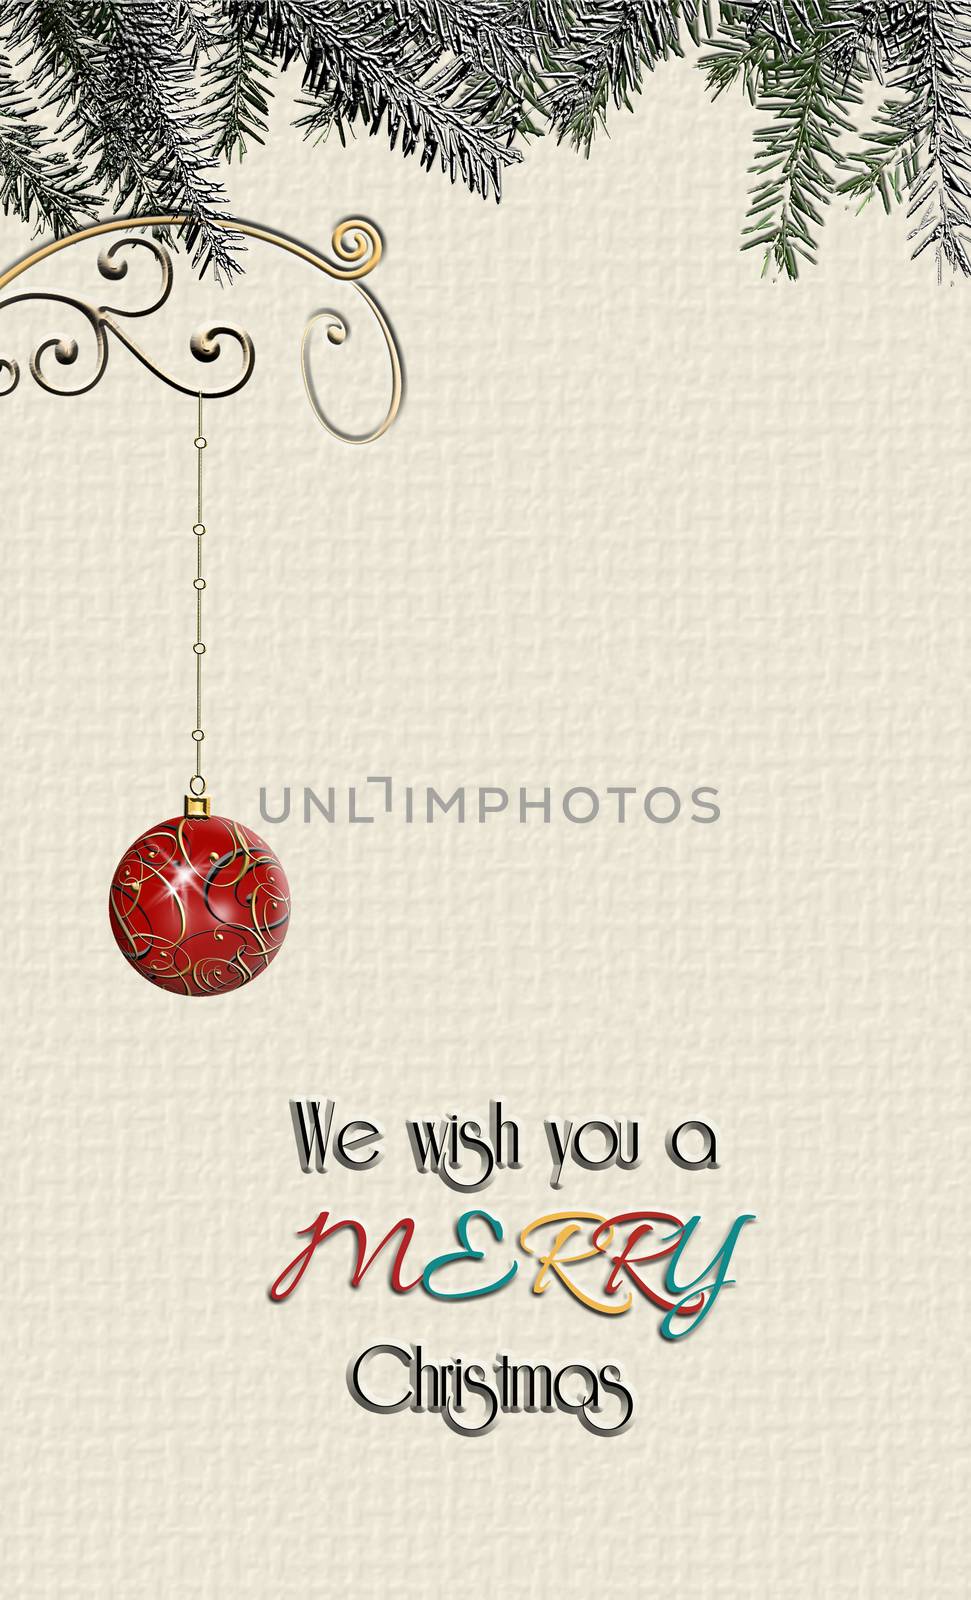 Minimalist Christmas festive card by NelliPolk